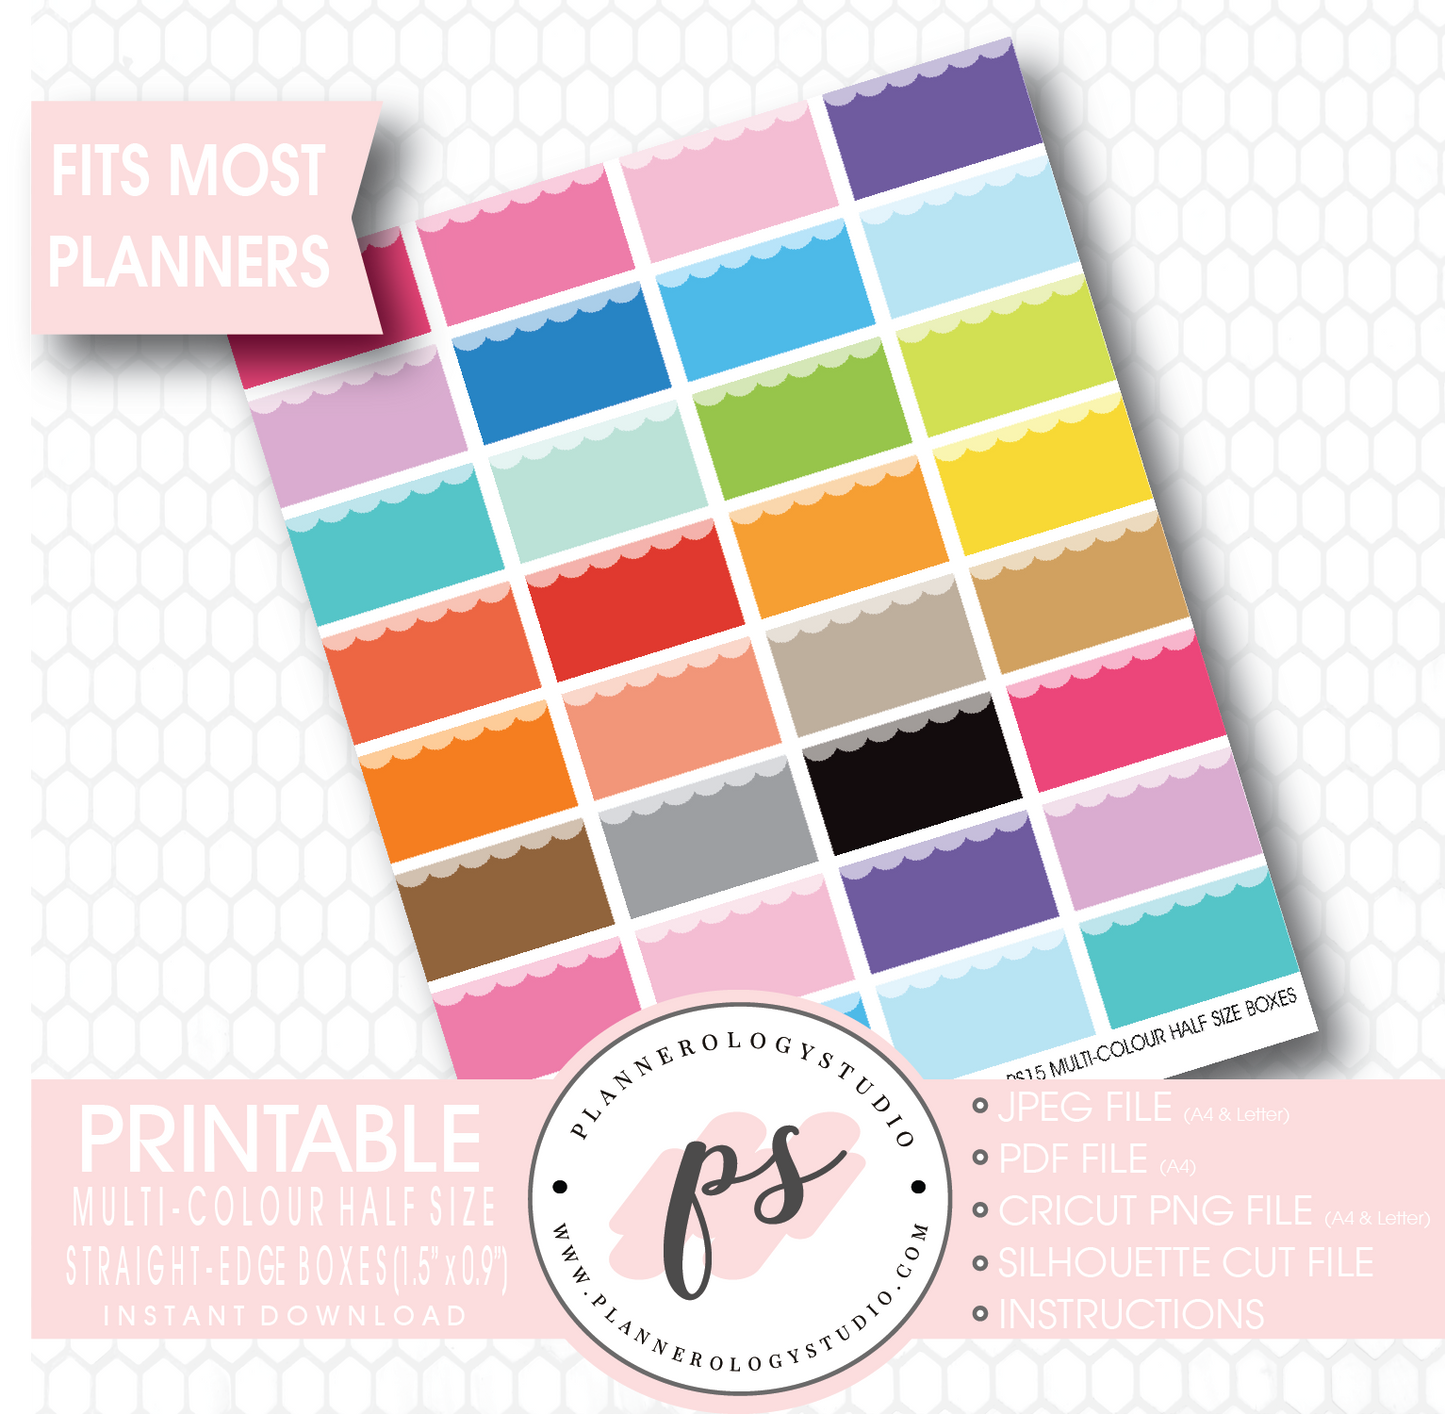 Multi-Colour Half Size Straight Edge Boxes Printable Planner Stickers - Plannerologystudio